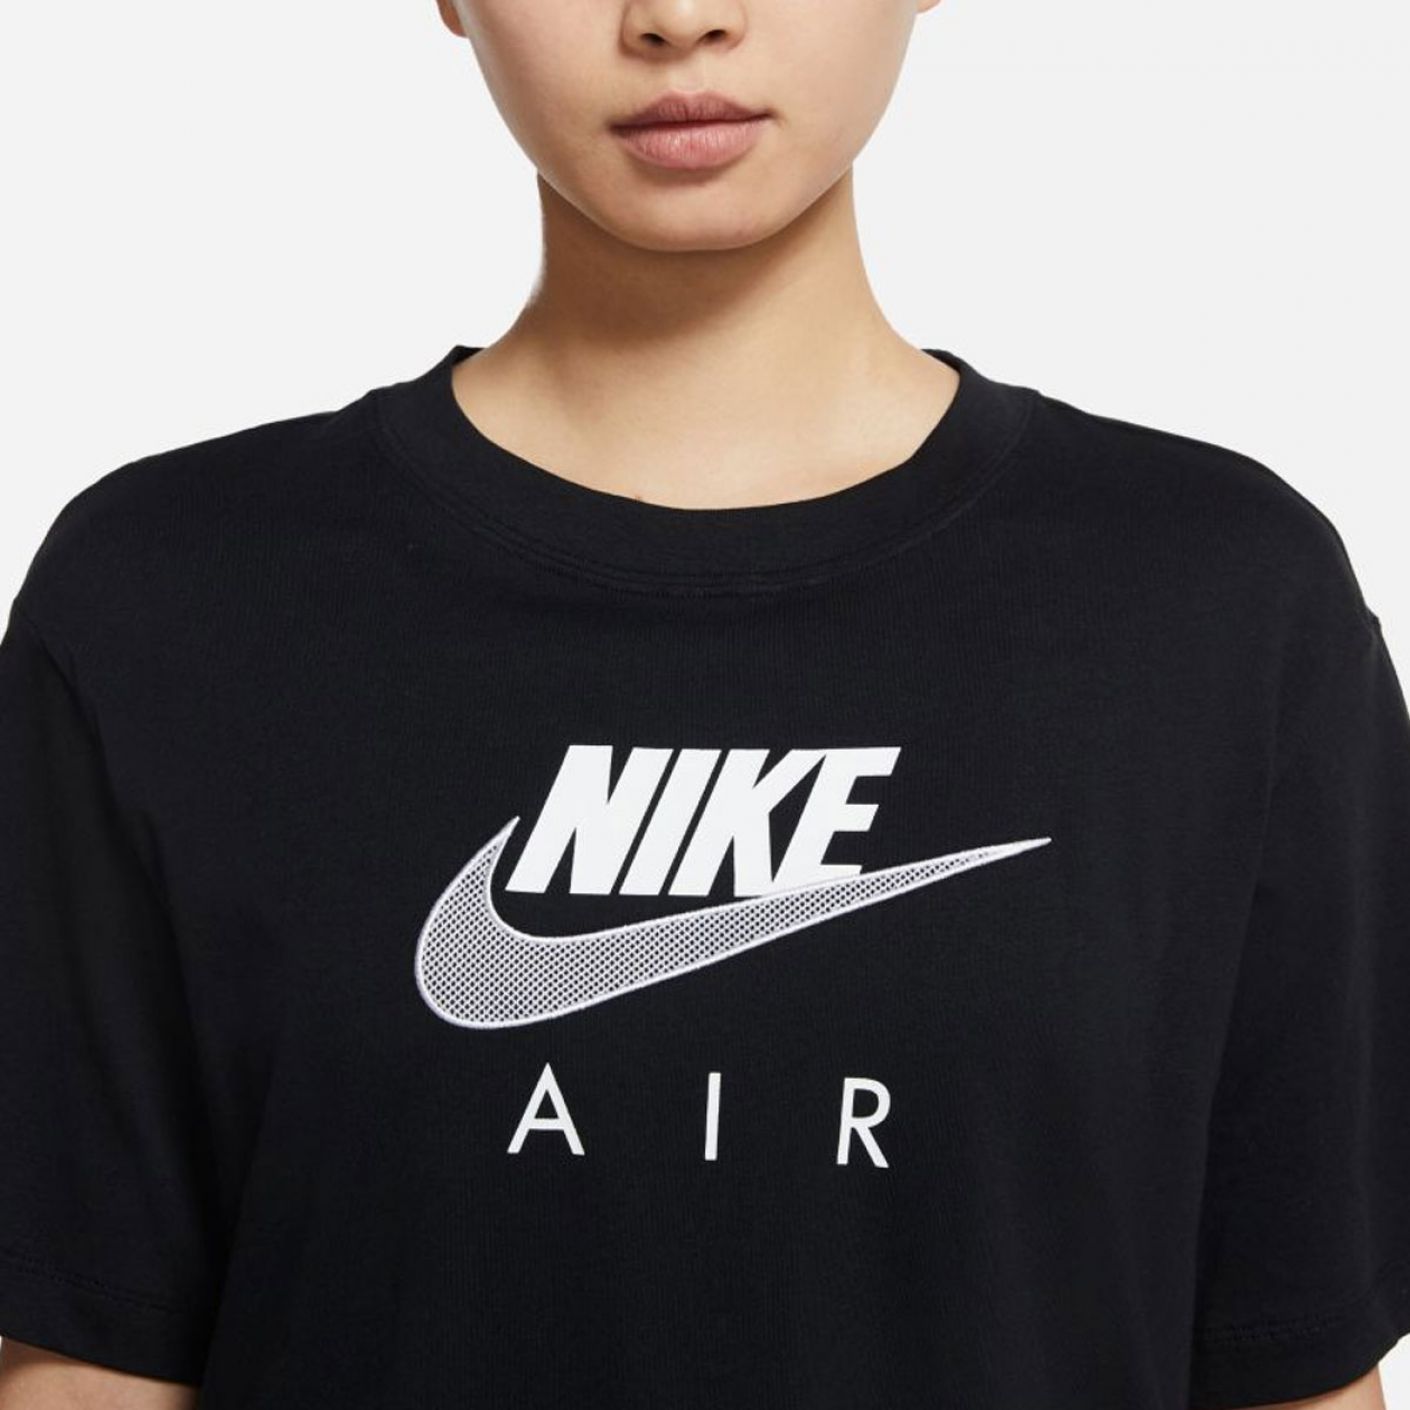 Nike Women's Air Tee Black T-shirt